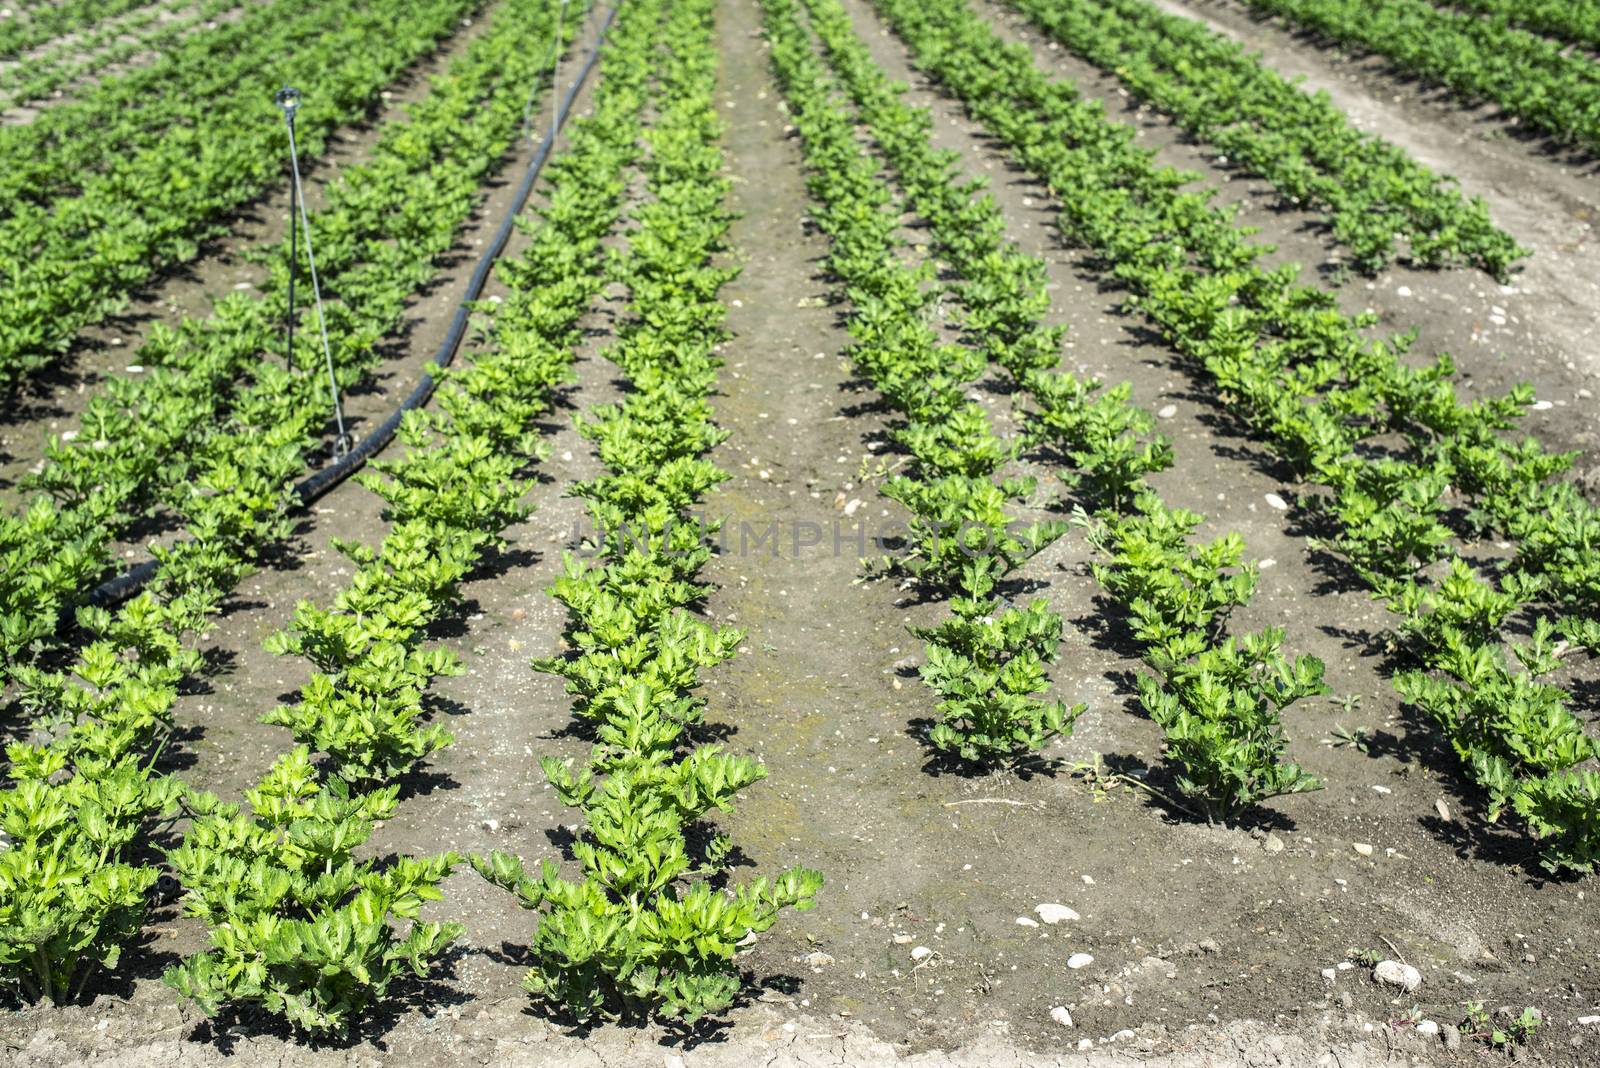 Growing Celery On Plantation. Celery plants in rows.  by deyan_georgiev